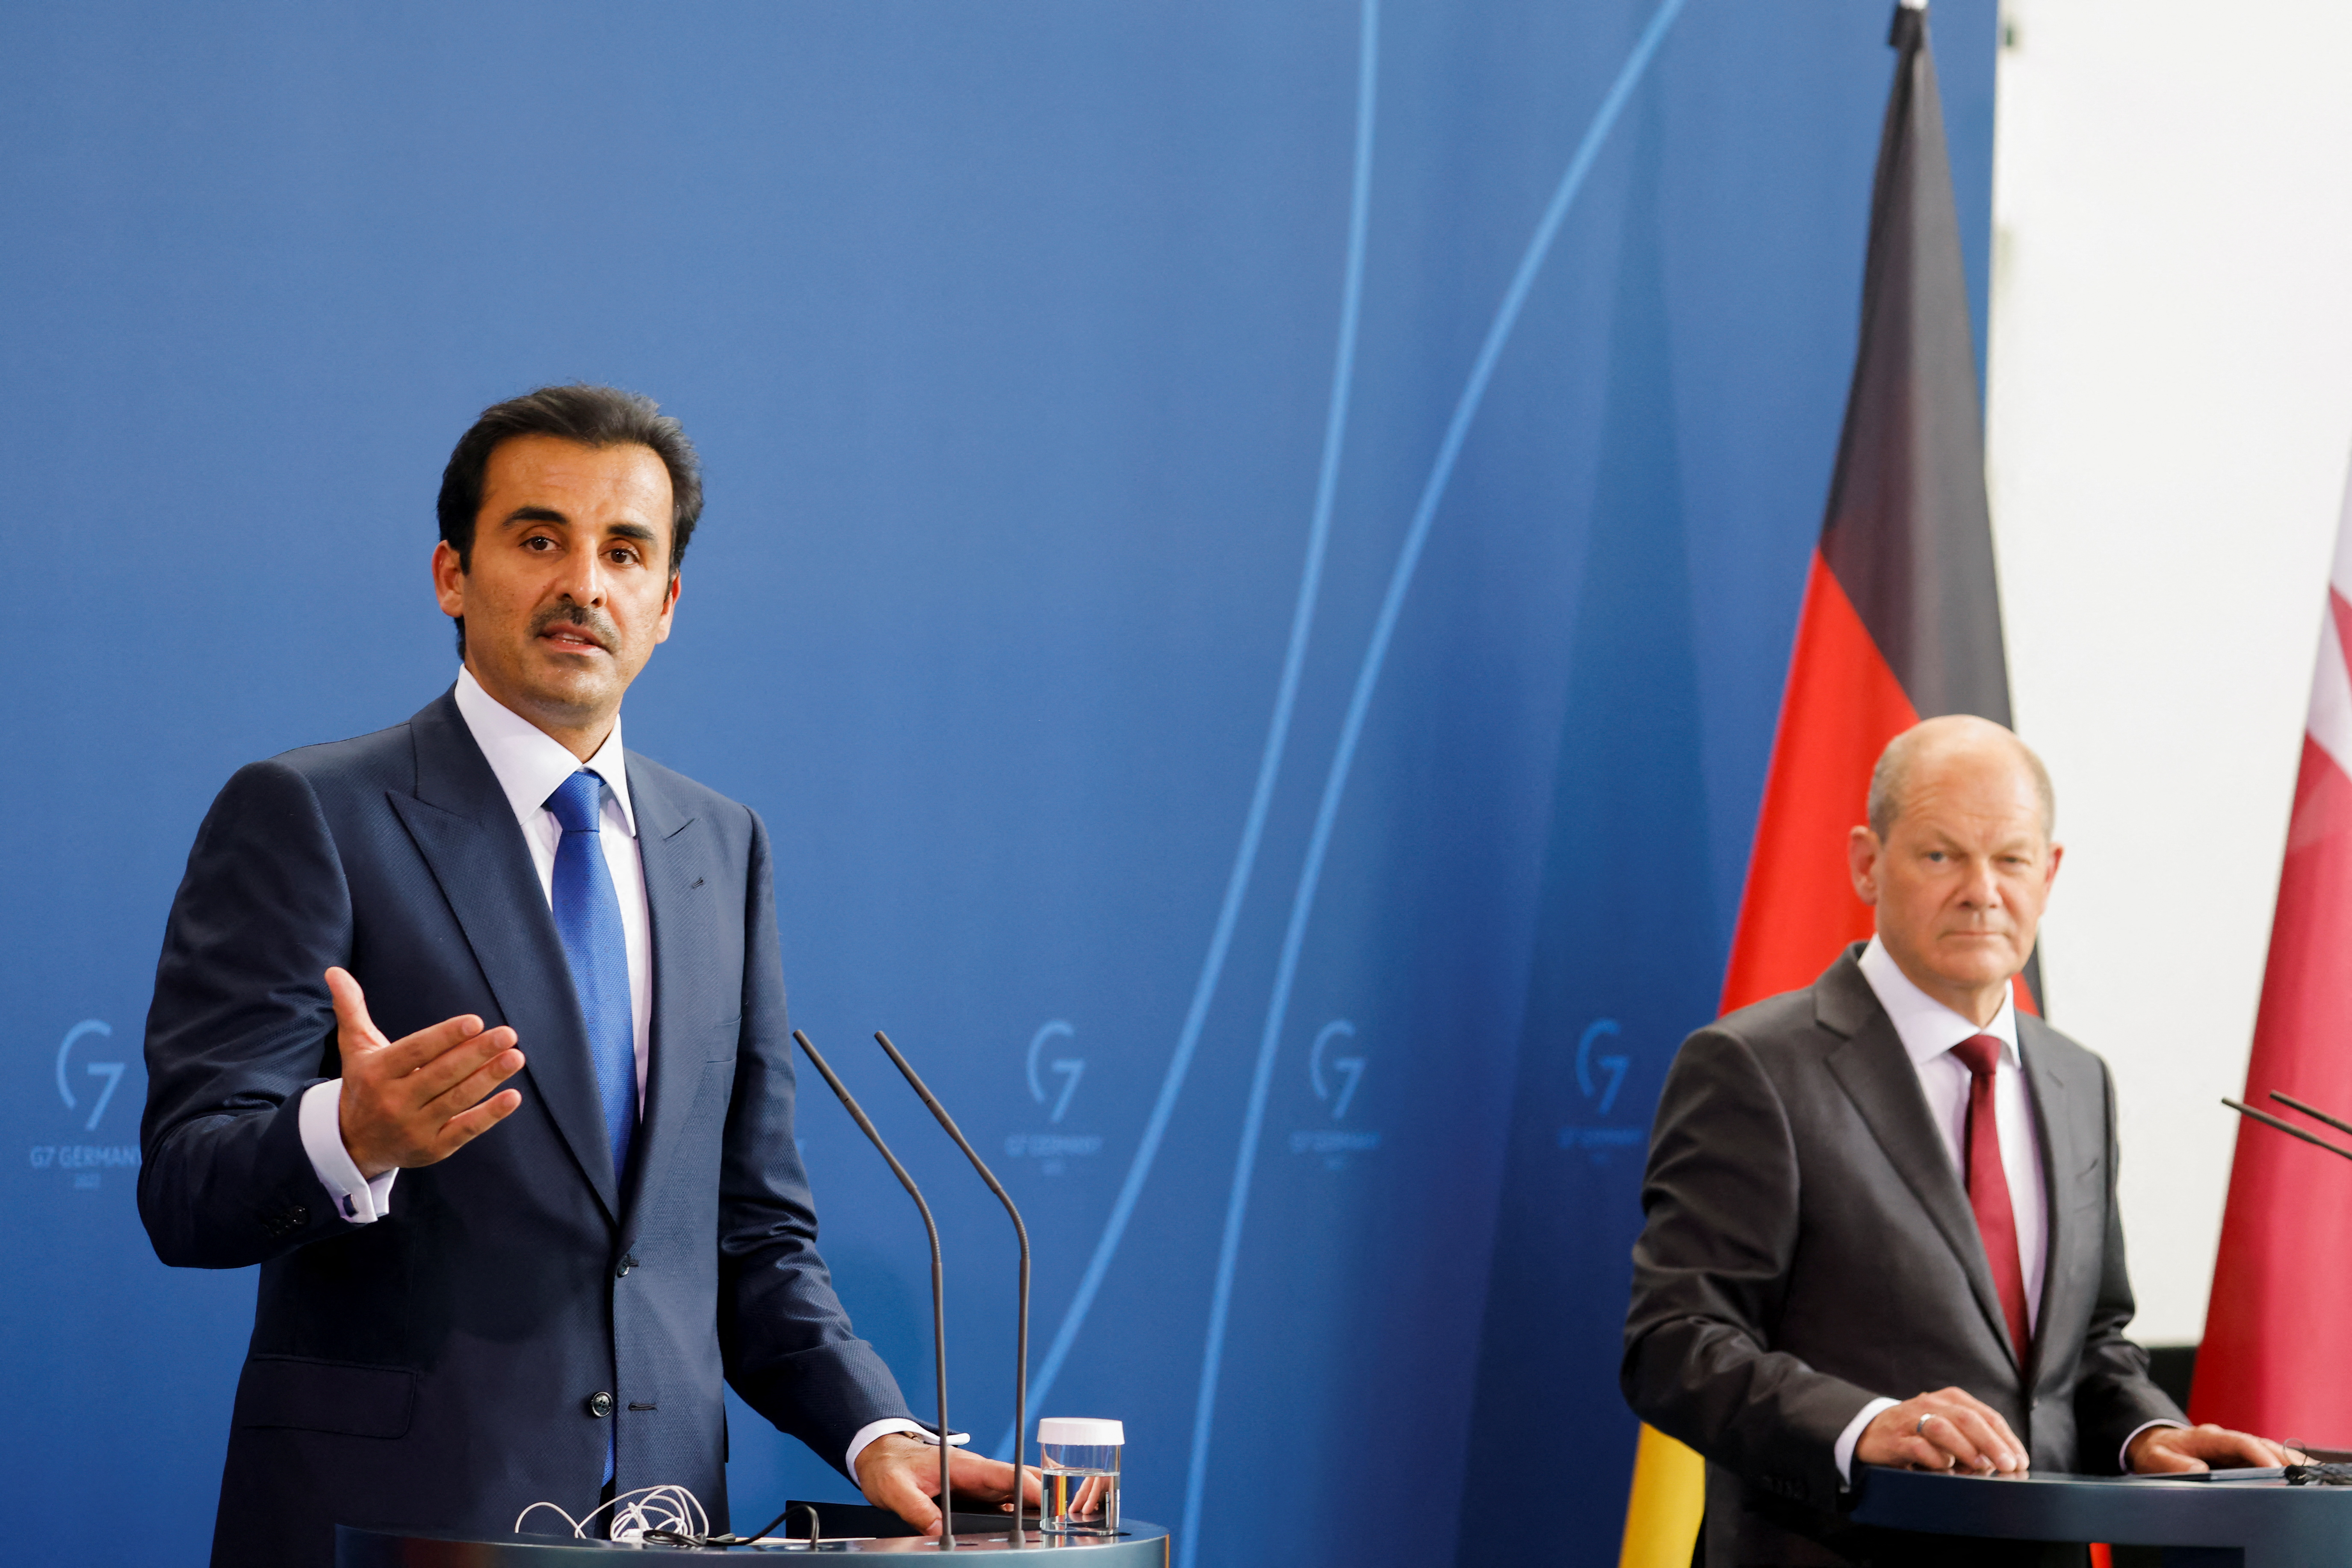 German Chancellor Scholz and Qatar's Emir Sheikh Tamim bin Hamad al-Thani attend news conference, in Berlin